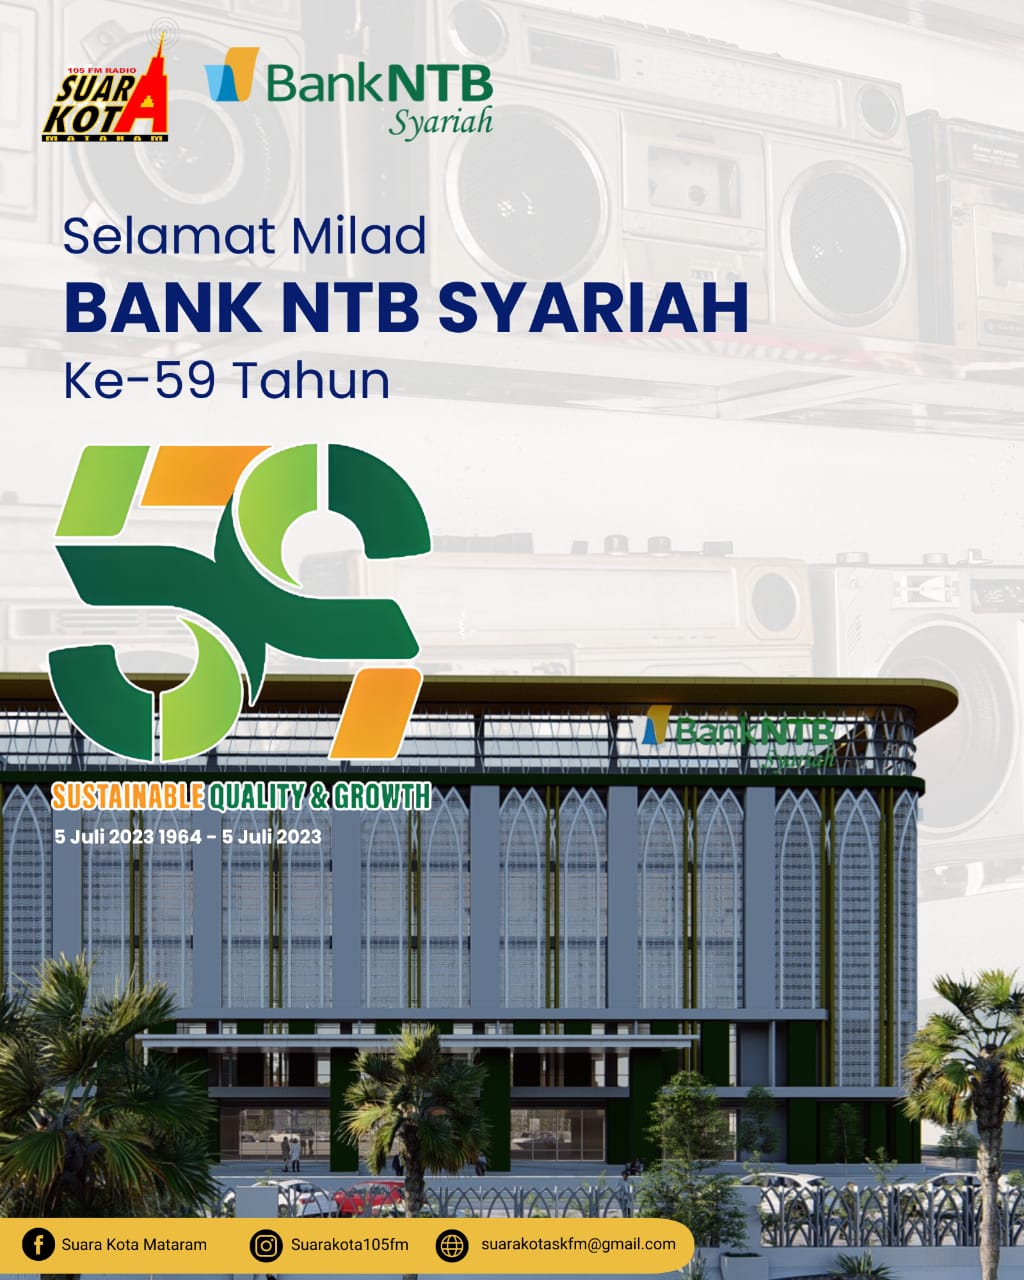 Selamat Milad Ke 59 Bank NTB Syariah